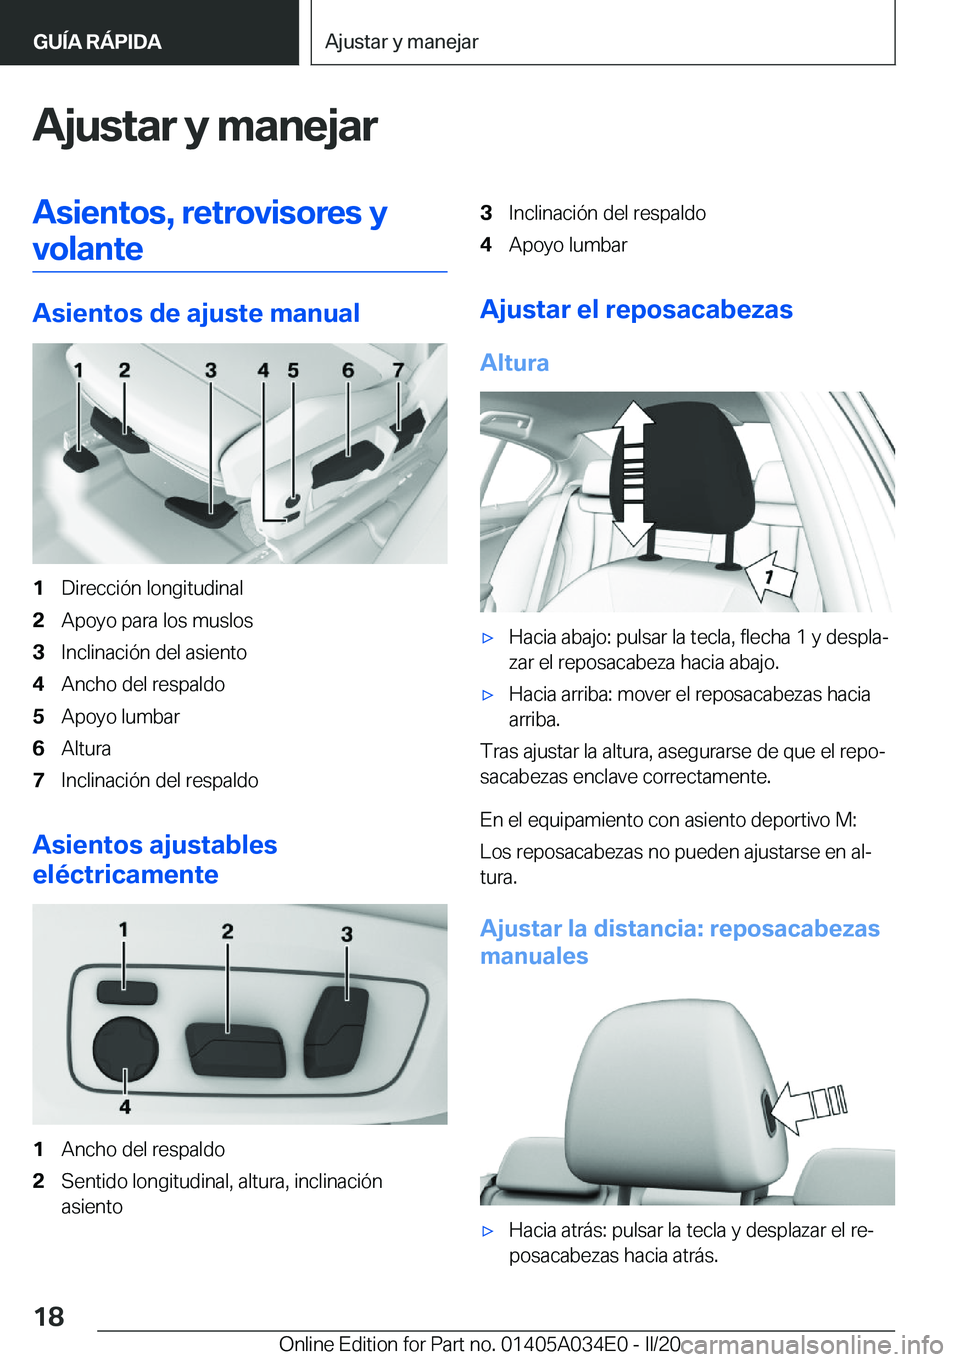 BMW X3 2020  Manuales de Empleo (in Spanish) �A�j�u�s�t�a�r��y��m�a�n�e�j�a�r�A�s�i�e�n�t�o�s�,��r�e�t�r�o�v�i�s�o�r�e�s��y
�v�o�l�a�n�t�e
�A�s�i�e�n�t�o�s��d�e��a�j�u�s�t�e��m�a�n�u�a�l
�1�D�i�r�e�c�c�i�